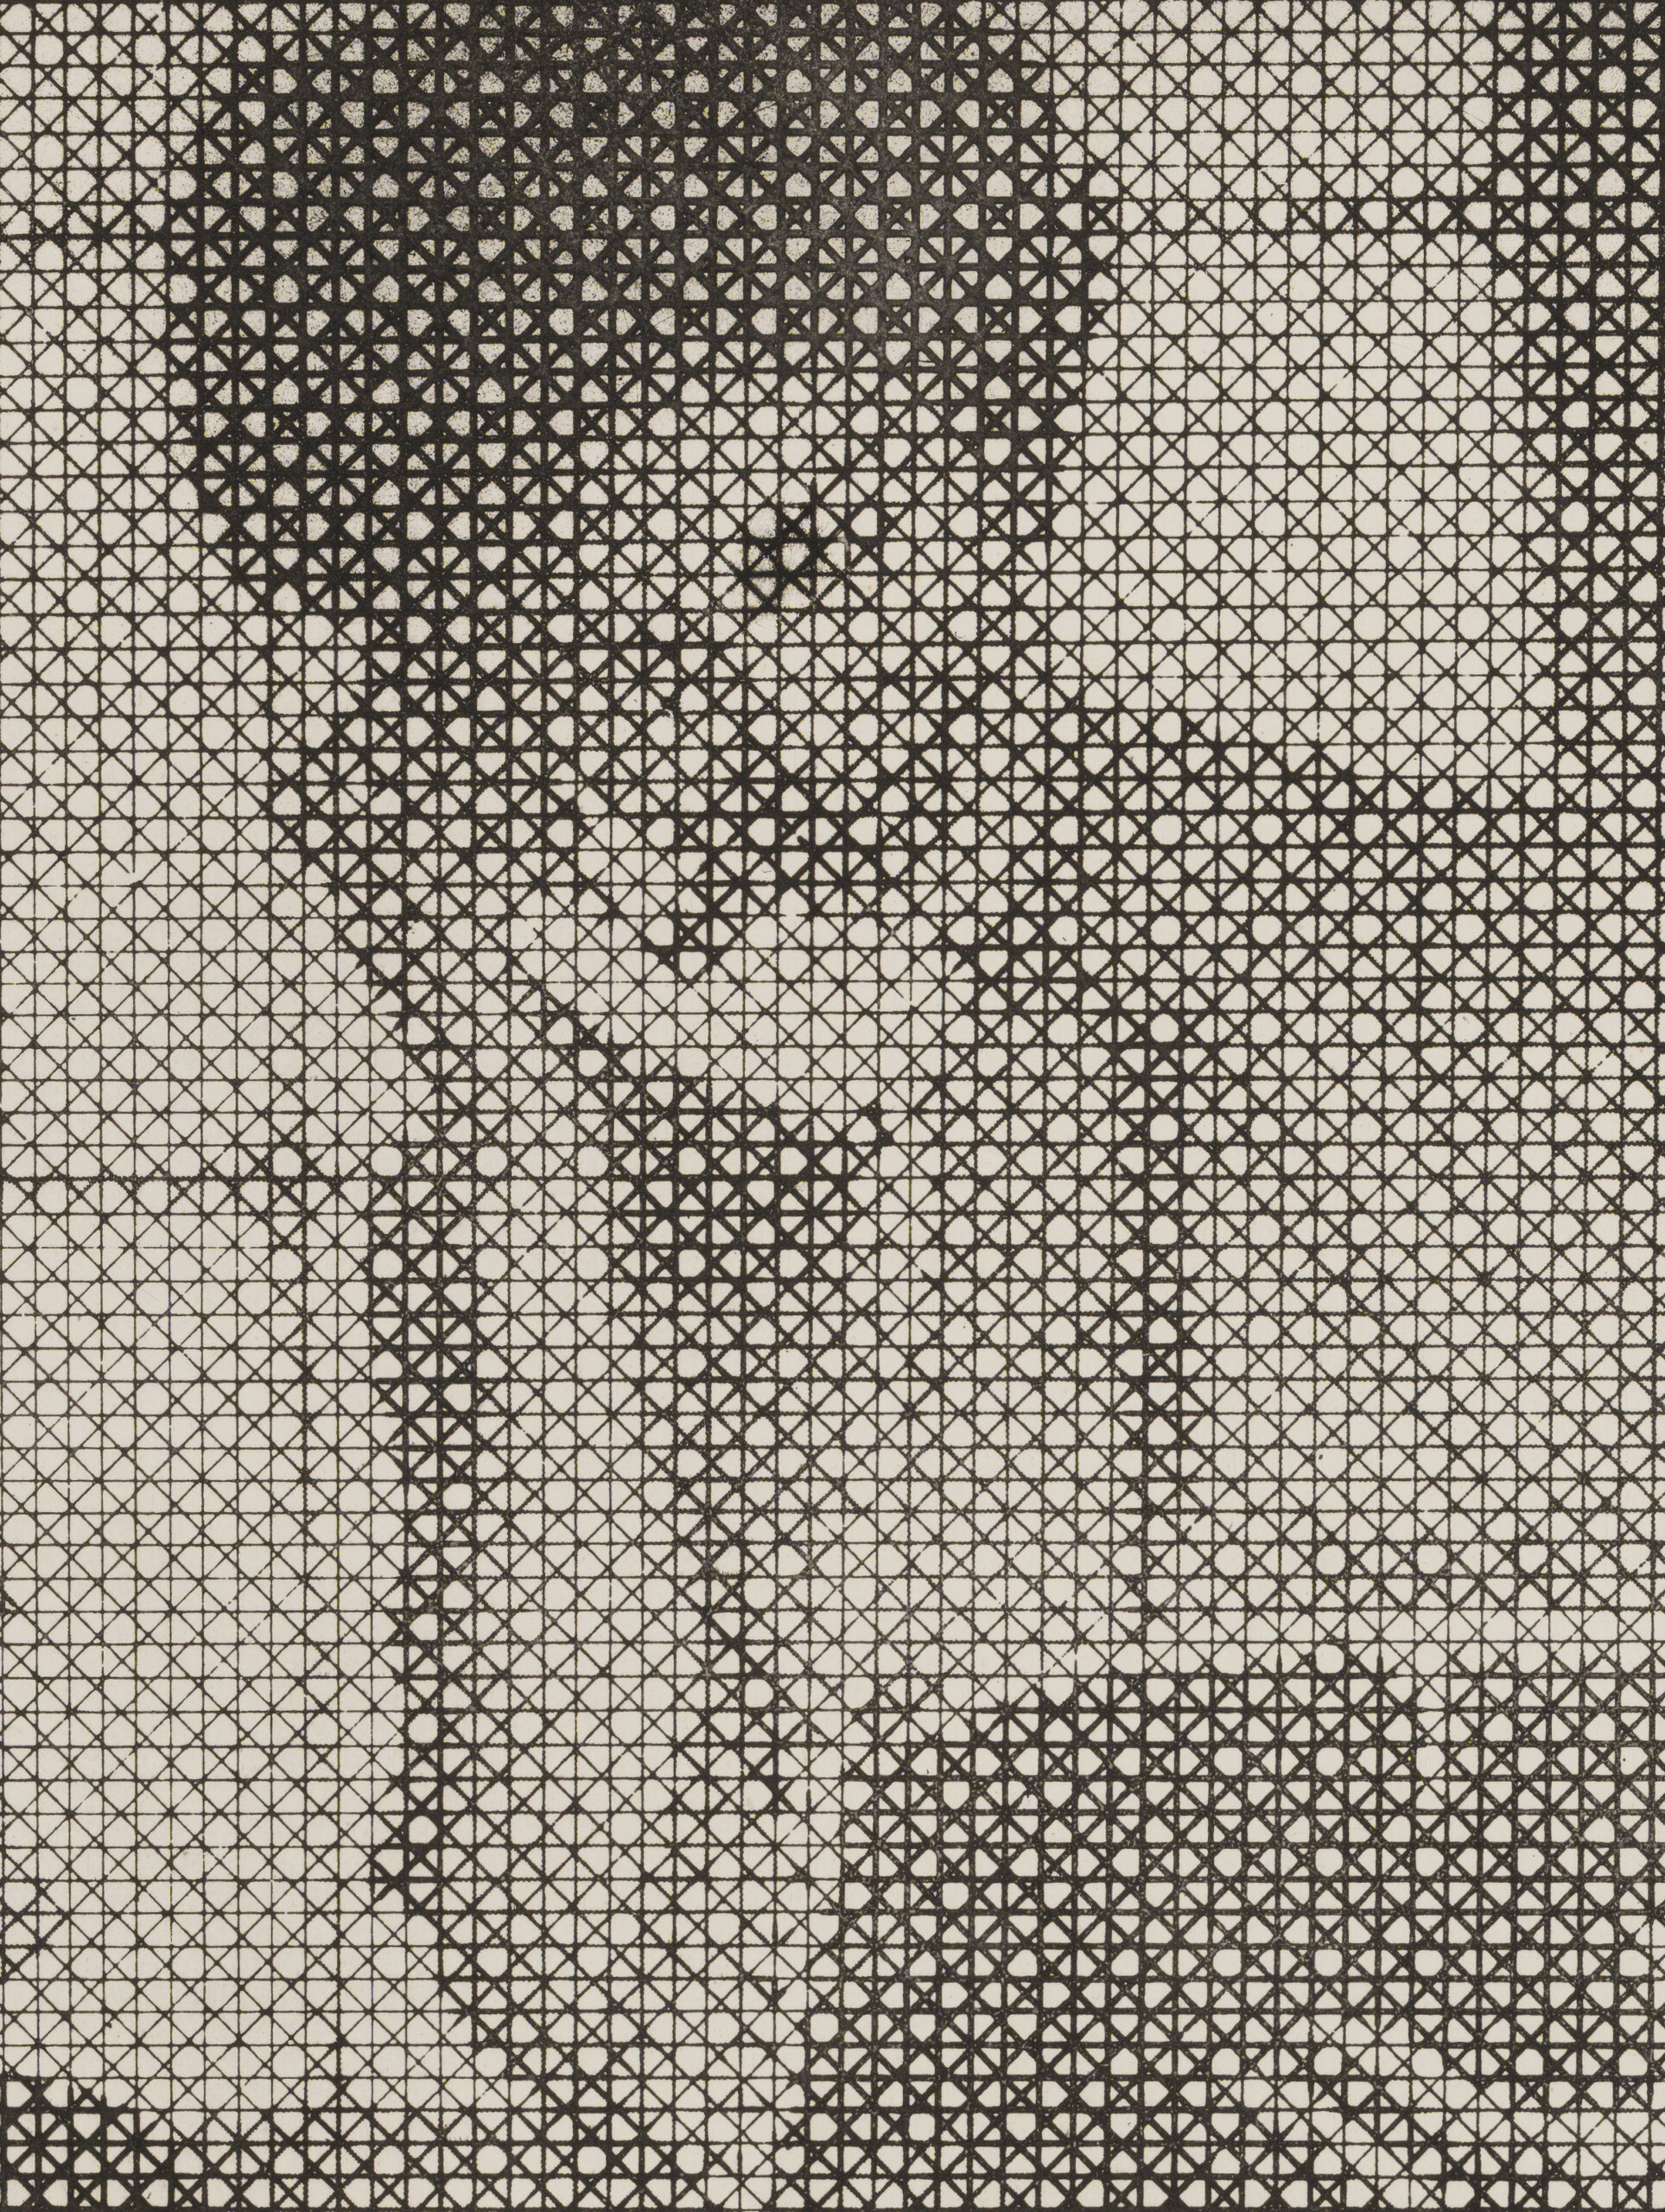 Urmas Ploomipuu “Suvila. Tüüpprojekt 5003”, 1976. Plm 43,9 x 43,2 cm.